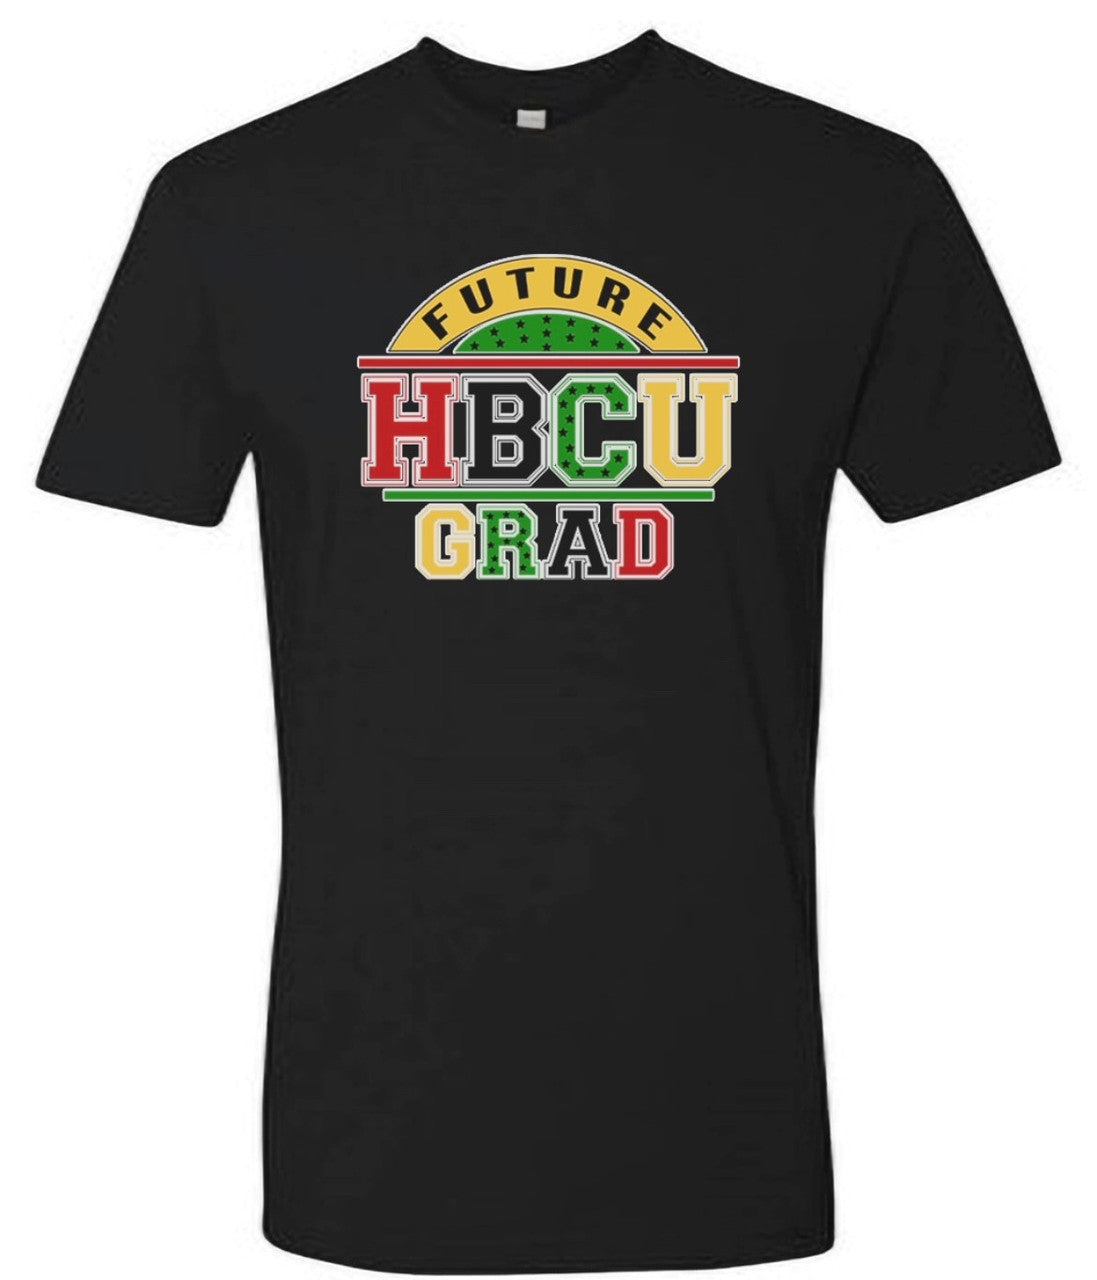 FUTURE HBCU GRAD- BLACK T-SHIRT